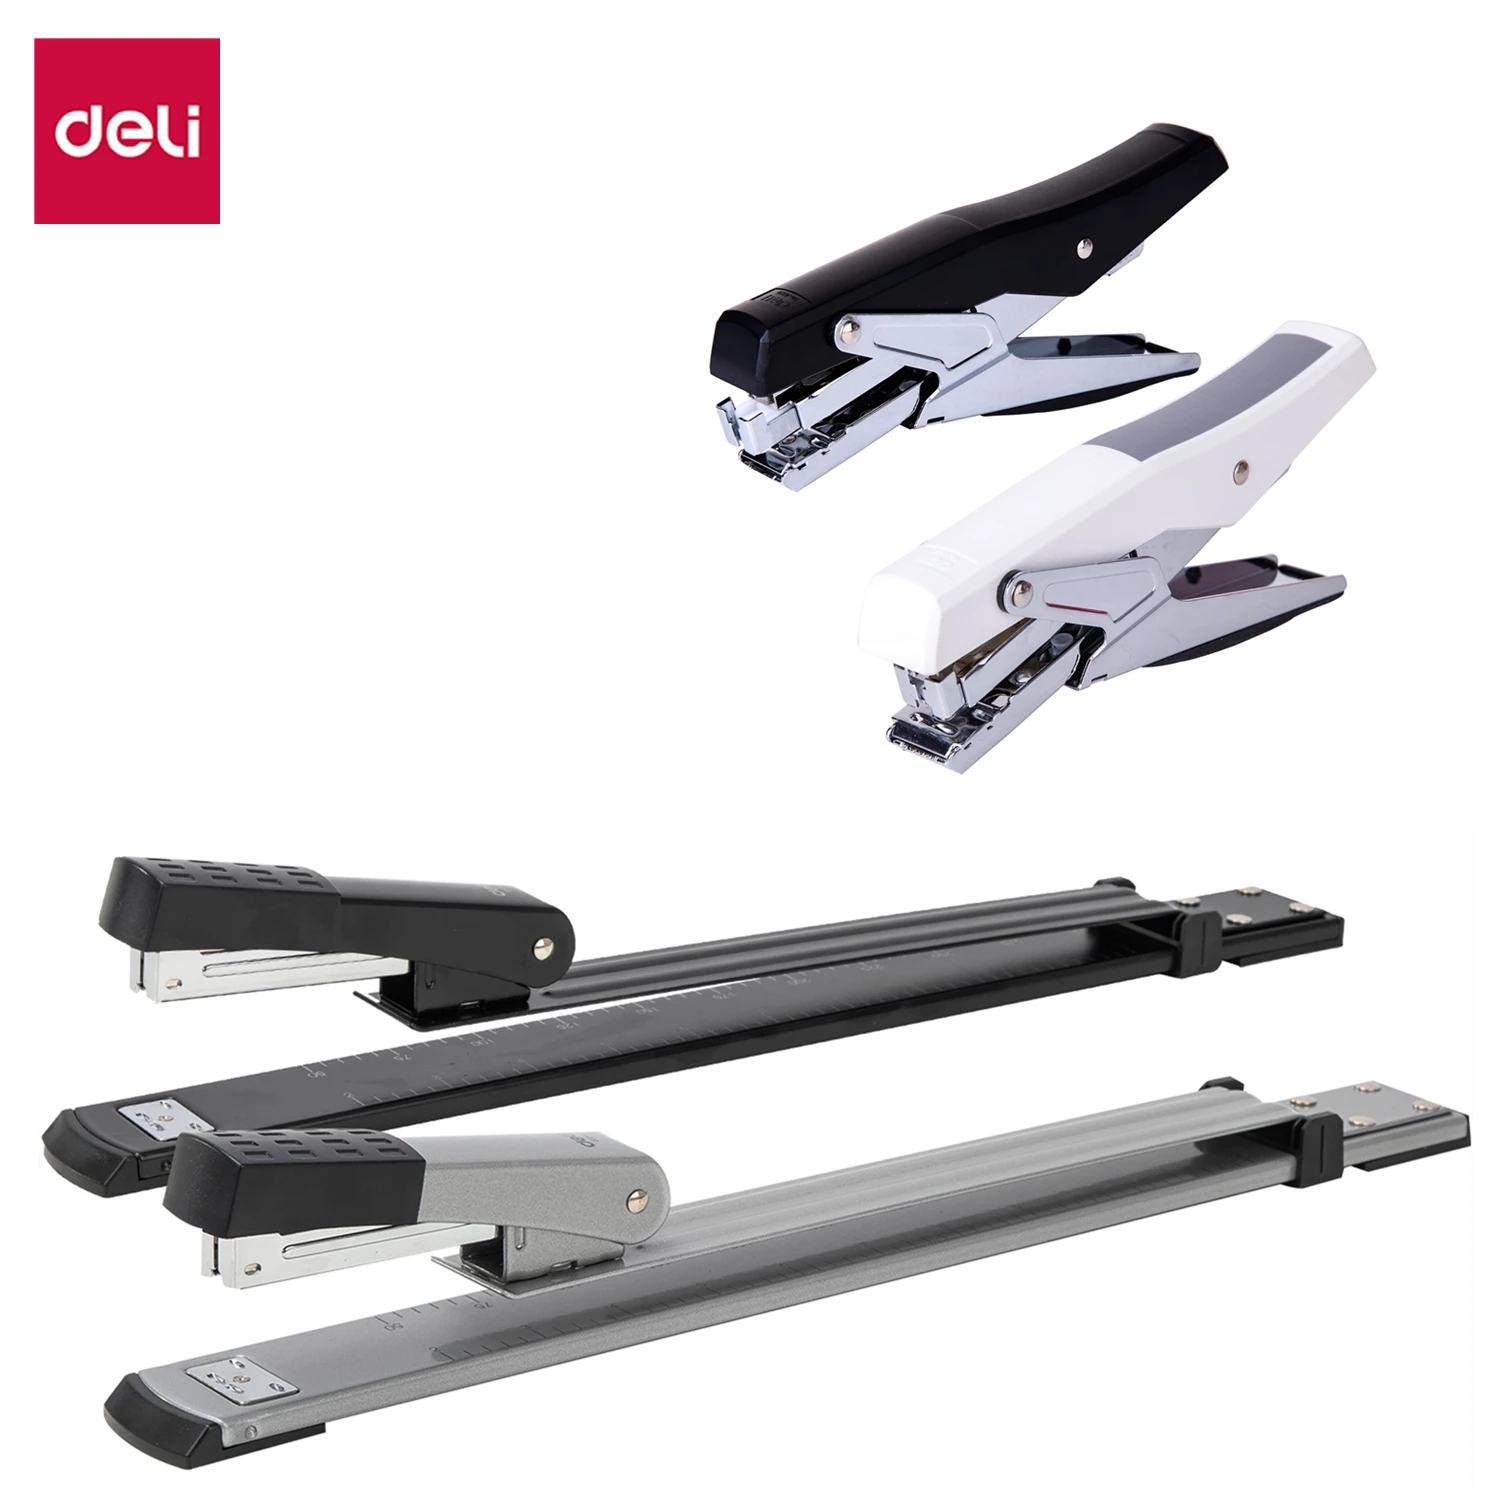 DELI Long Arm Stapler Plier Stapler Machine Black Grey Color Metal Structure Paper Sewing Machine Office Stationery